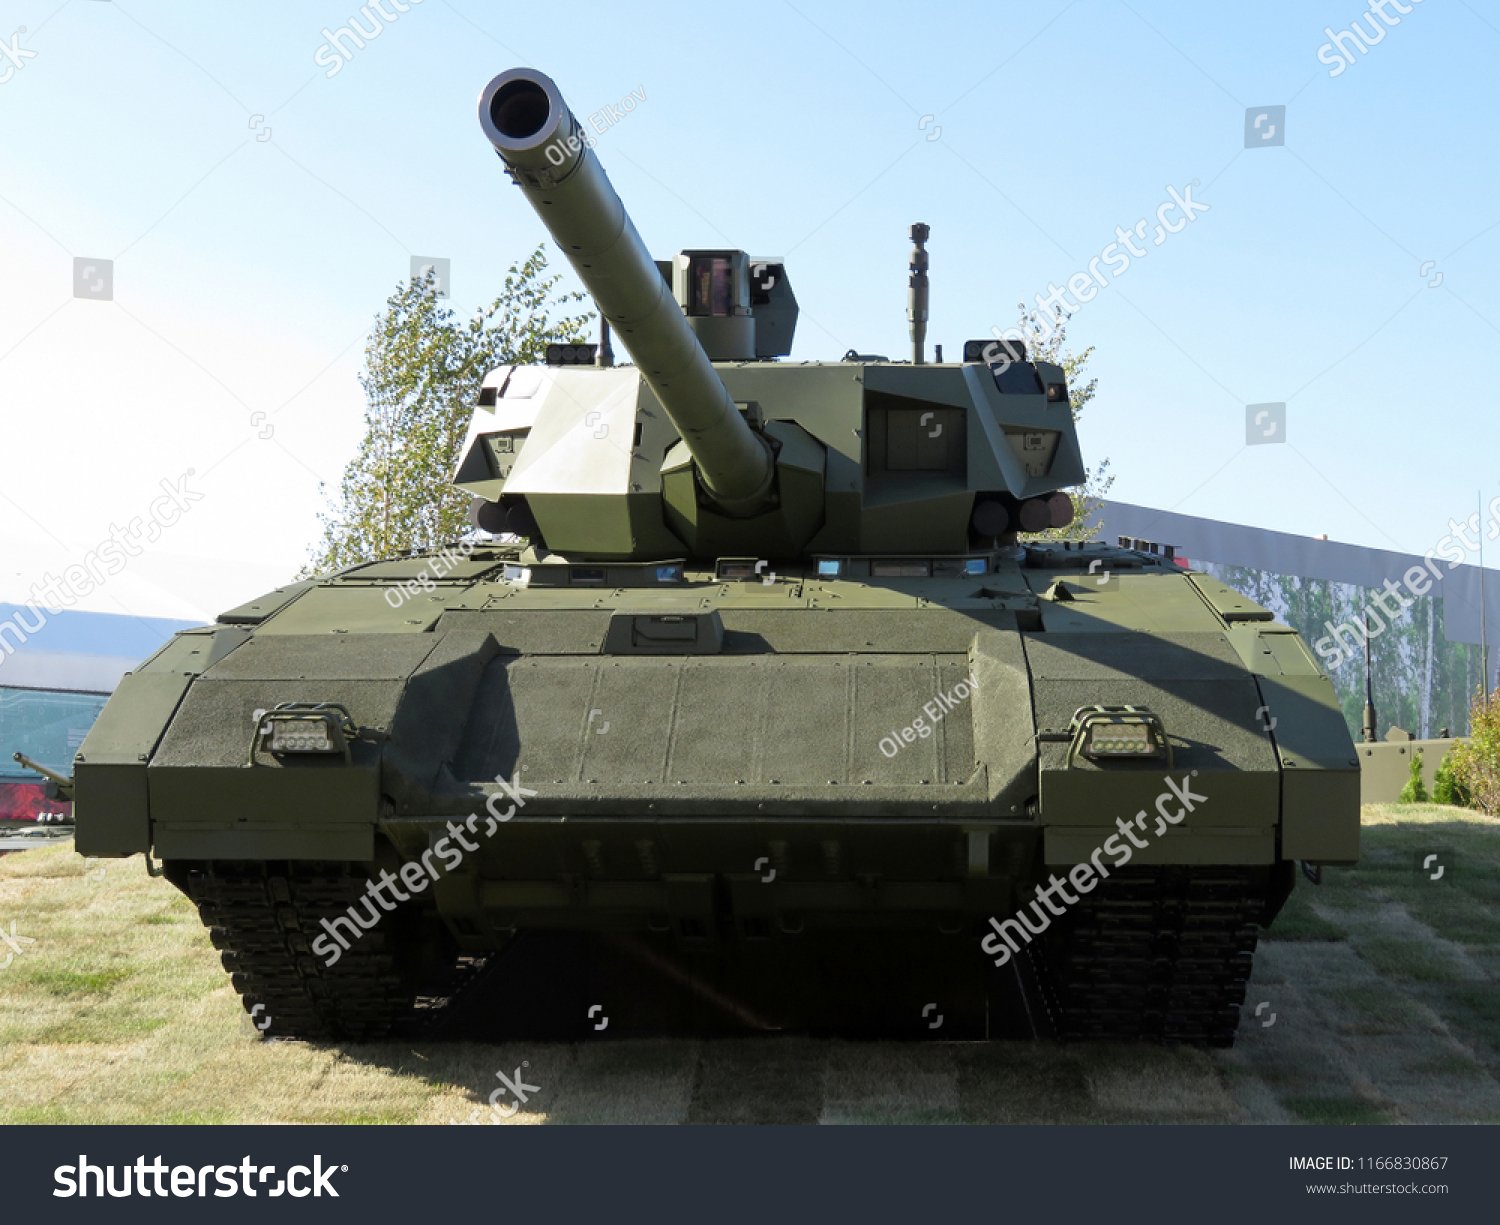 stock-photo-t-armata-newest-russian-main-battle-tank-front-view-1166830867.jpg